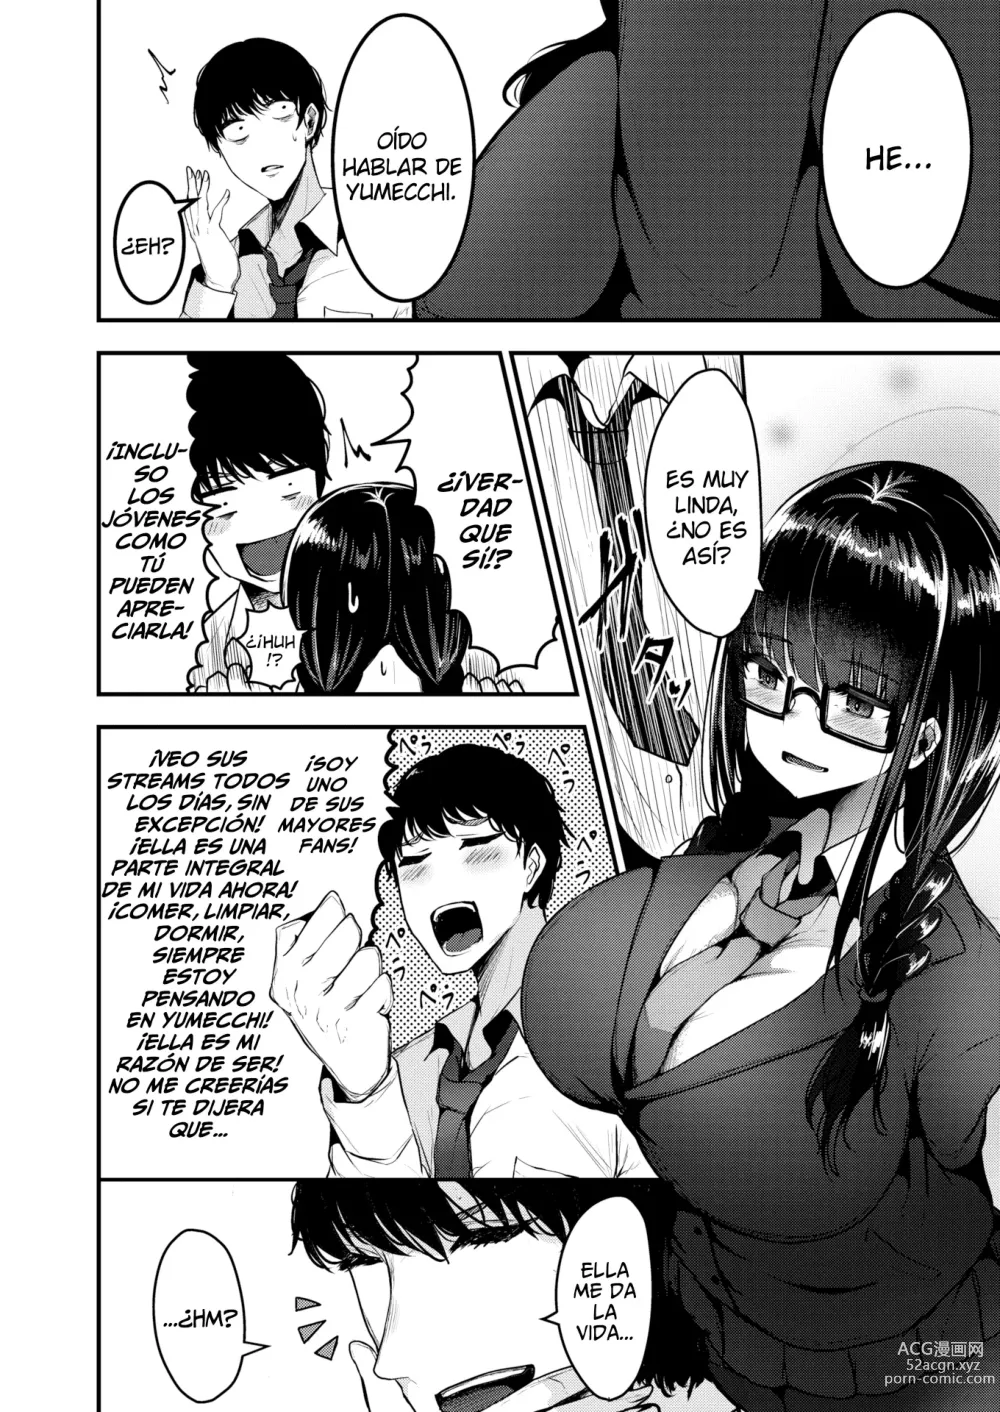 Page 6 of manga Yumecchi Livestream